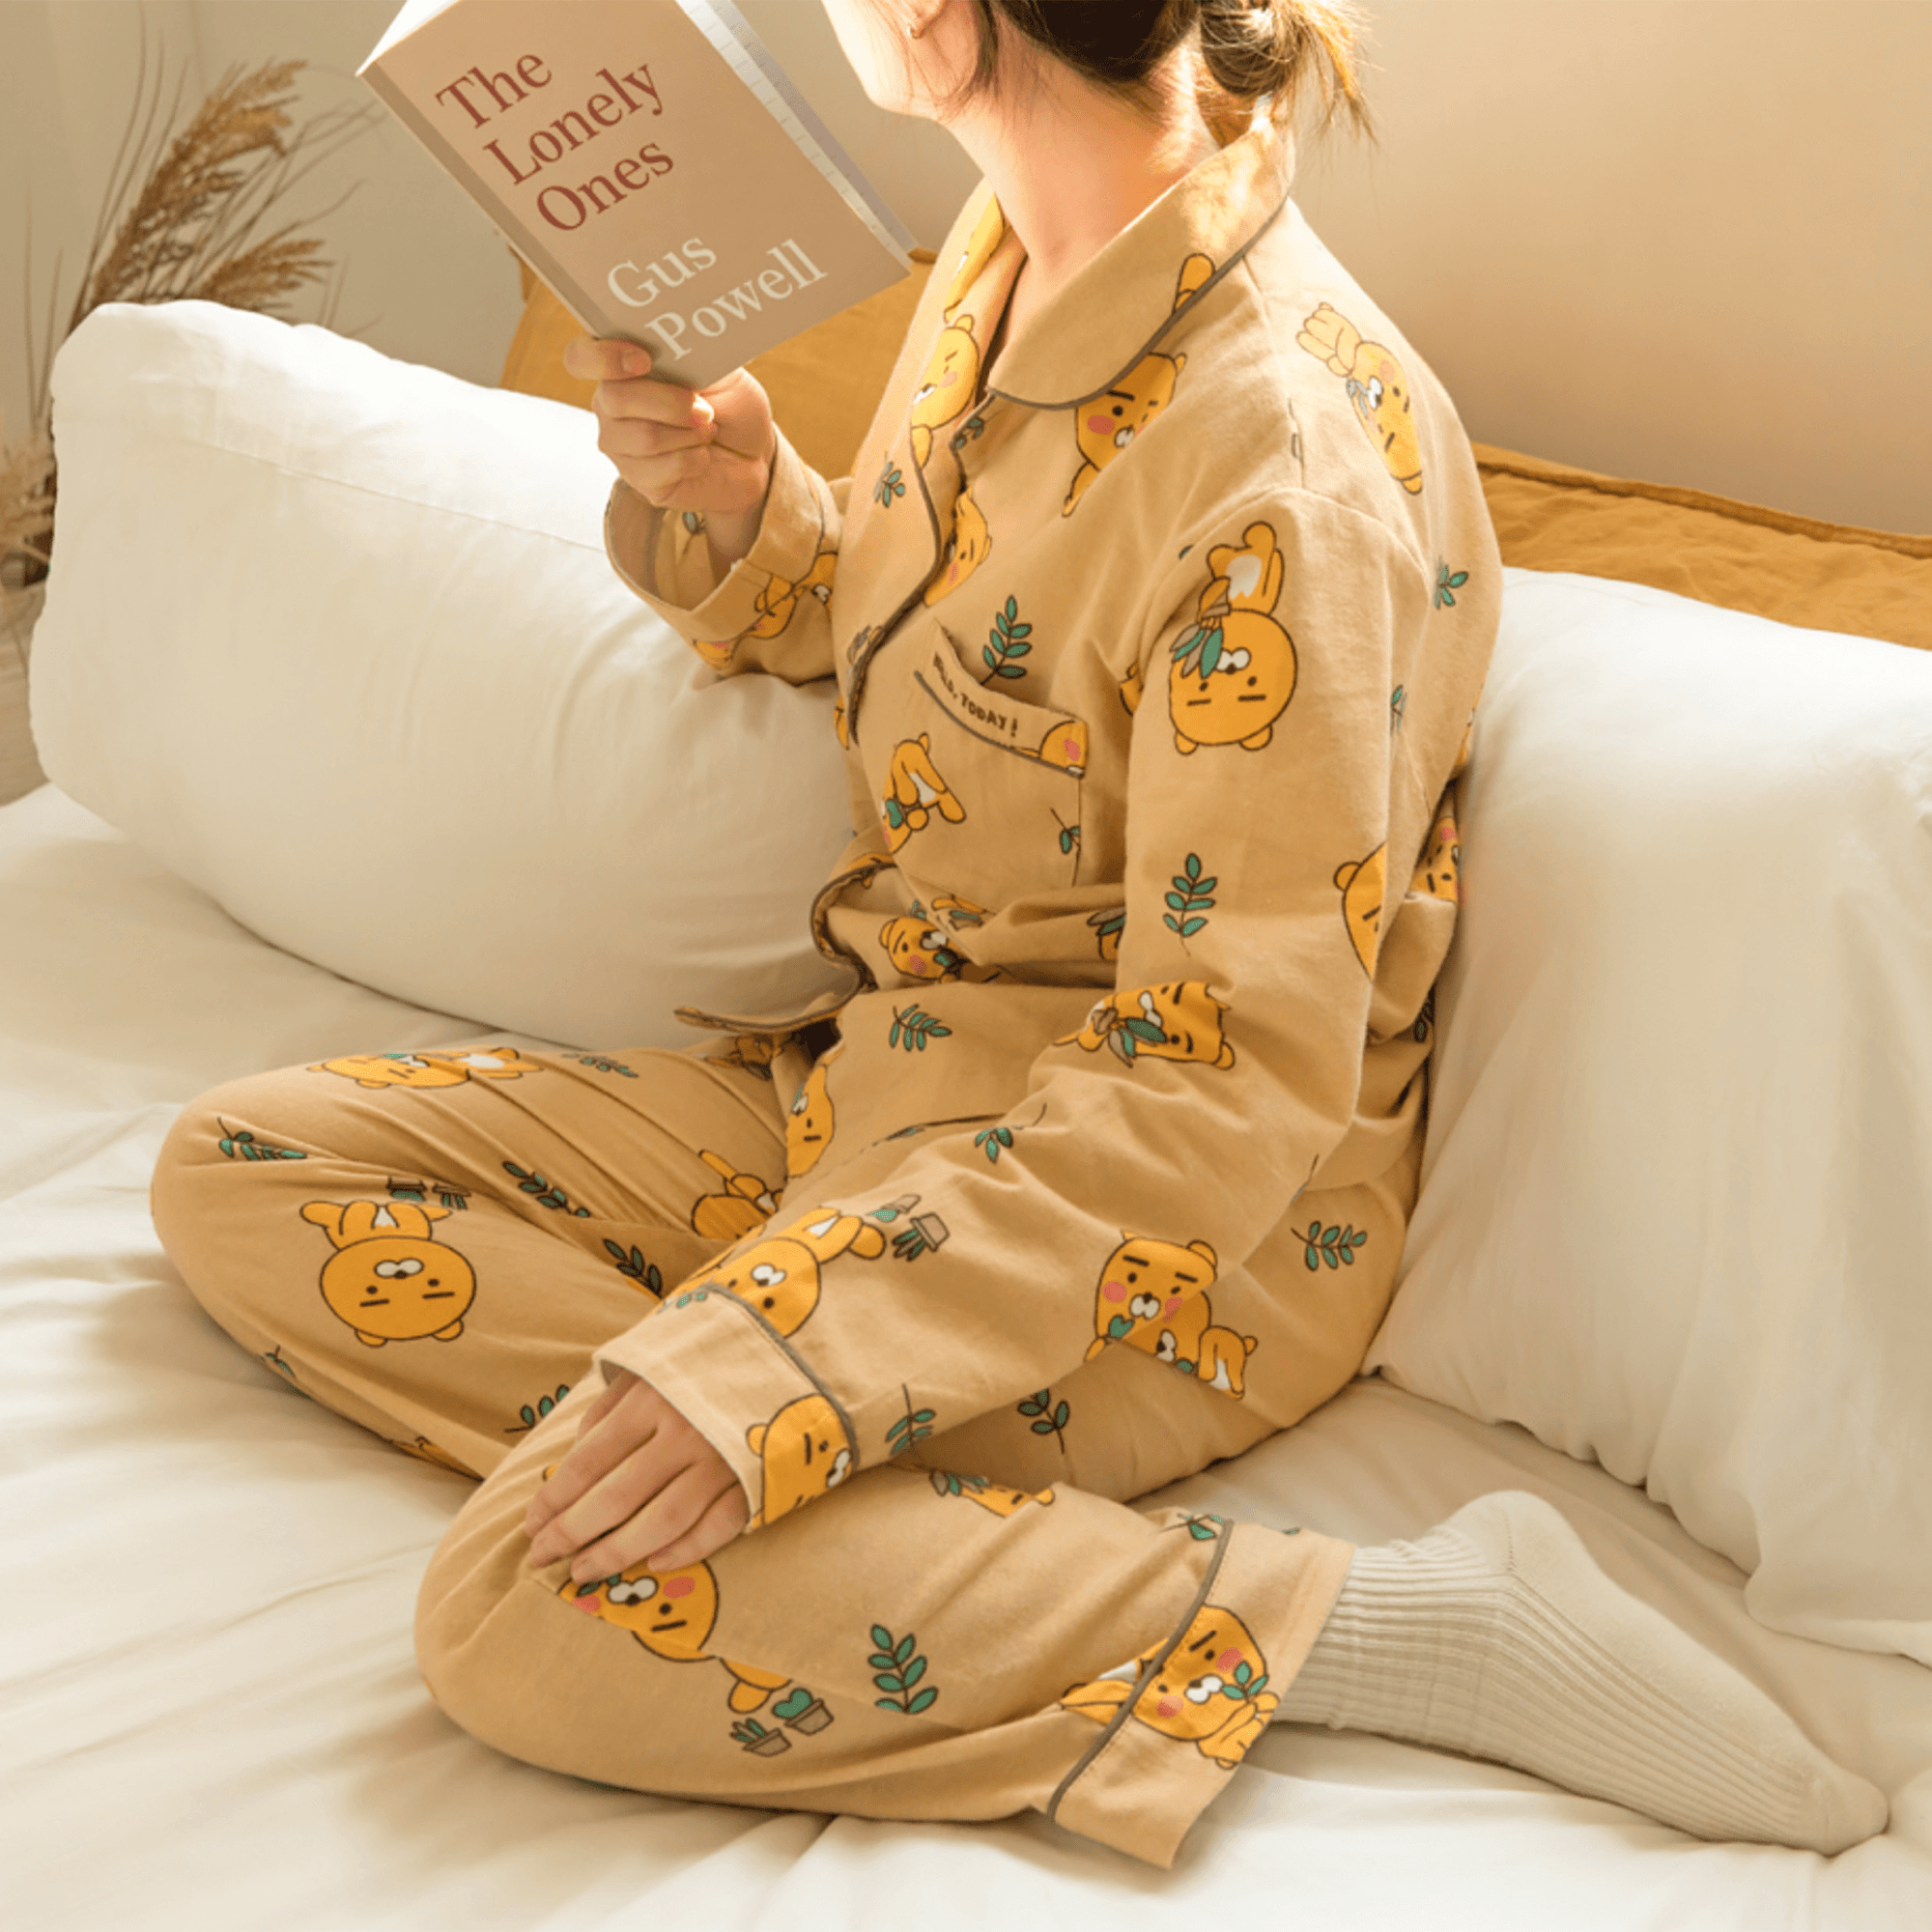 KAKAO FRIENDS Pajama Small Size Sleepwear 100% Cotton Clothes Set - SkoopMarket